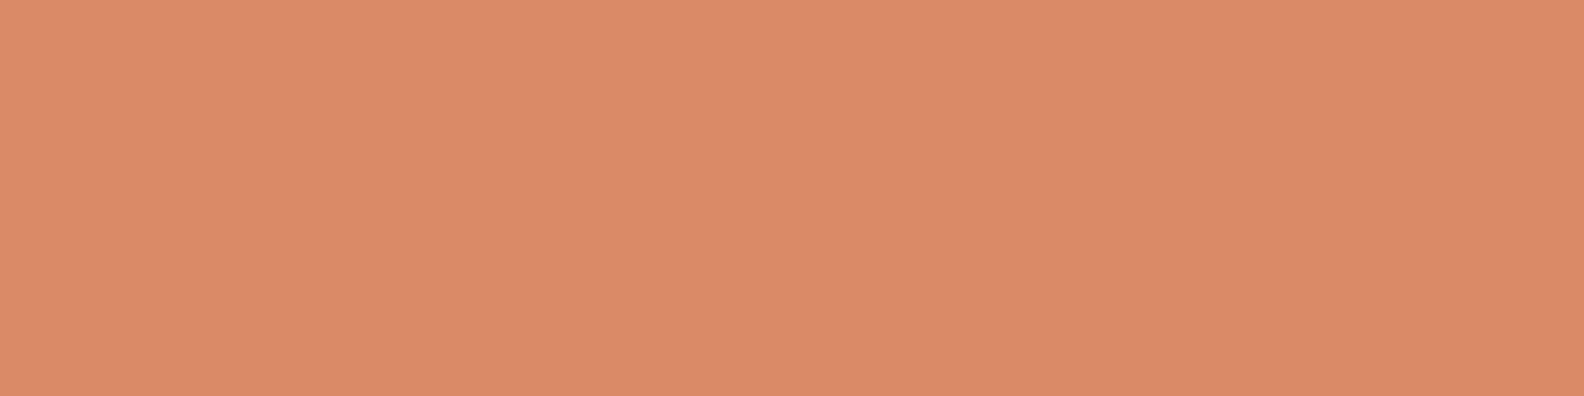 1584x396 Pale Copper Solid Color Background